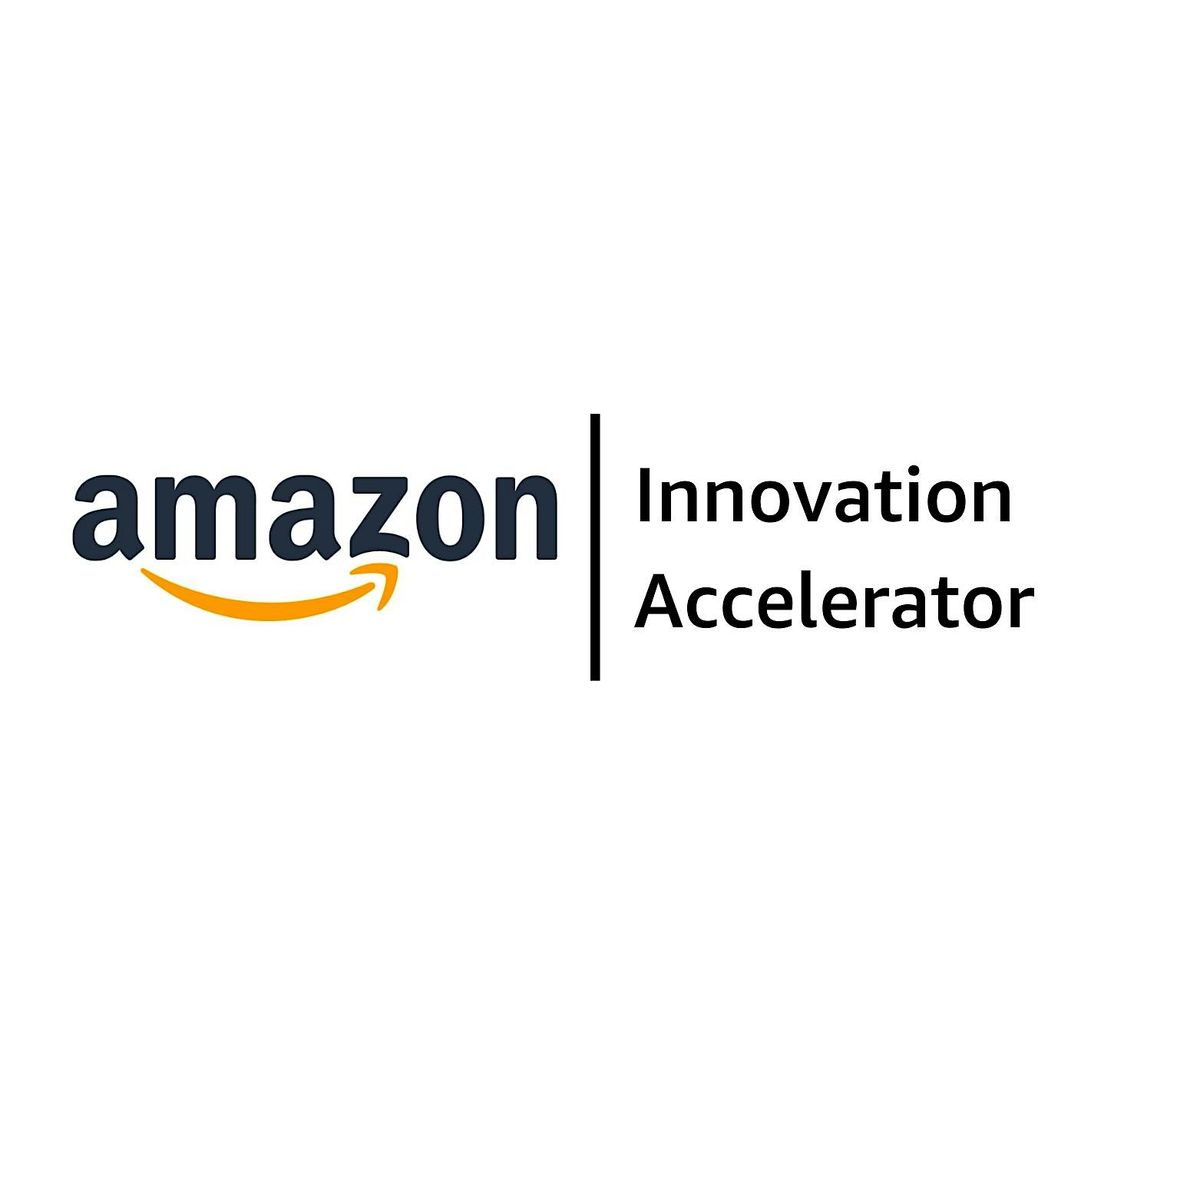 Amazon Innovation Accelerator small business growth programme \u2013 Fife